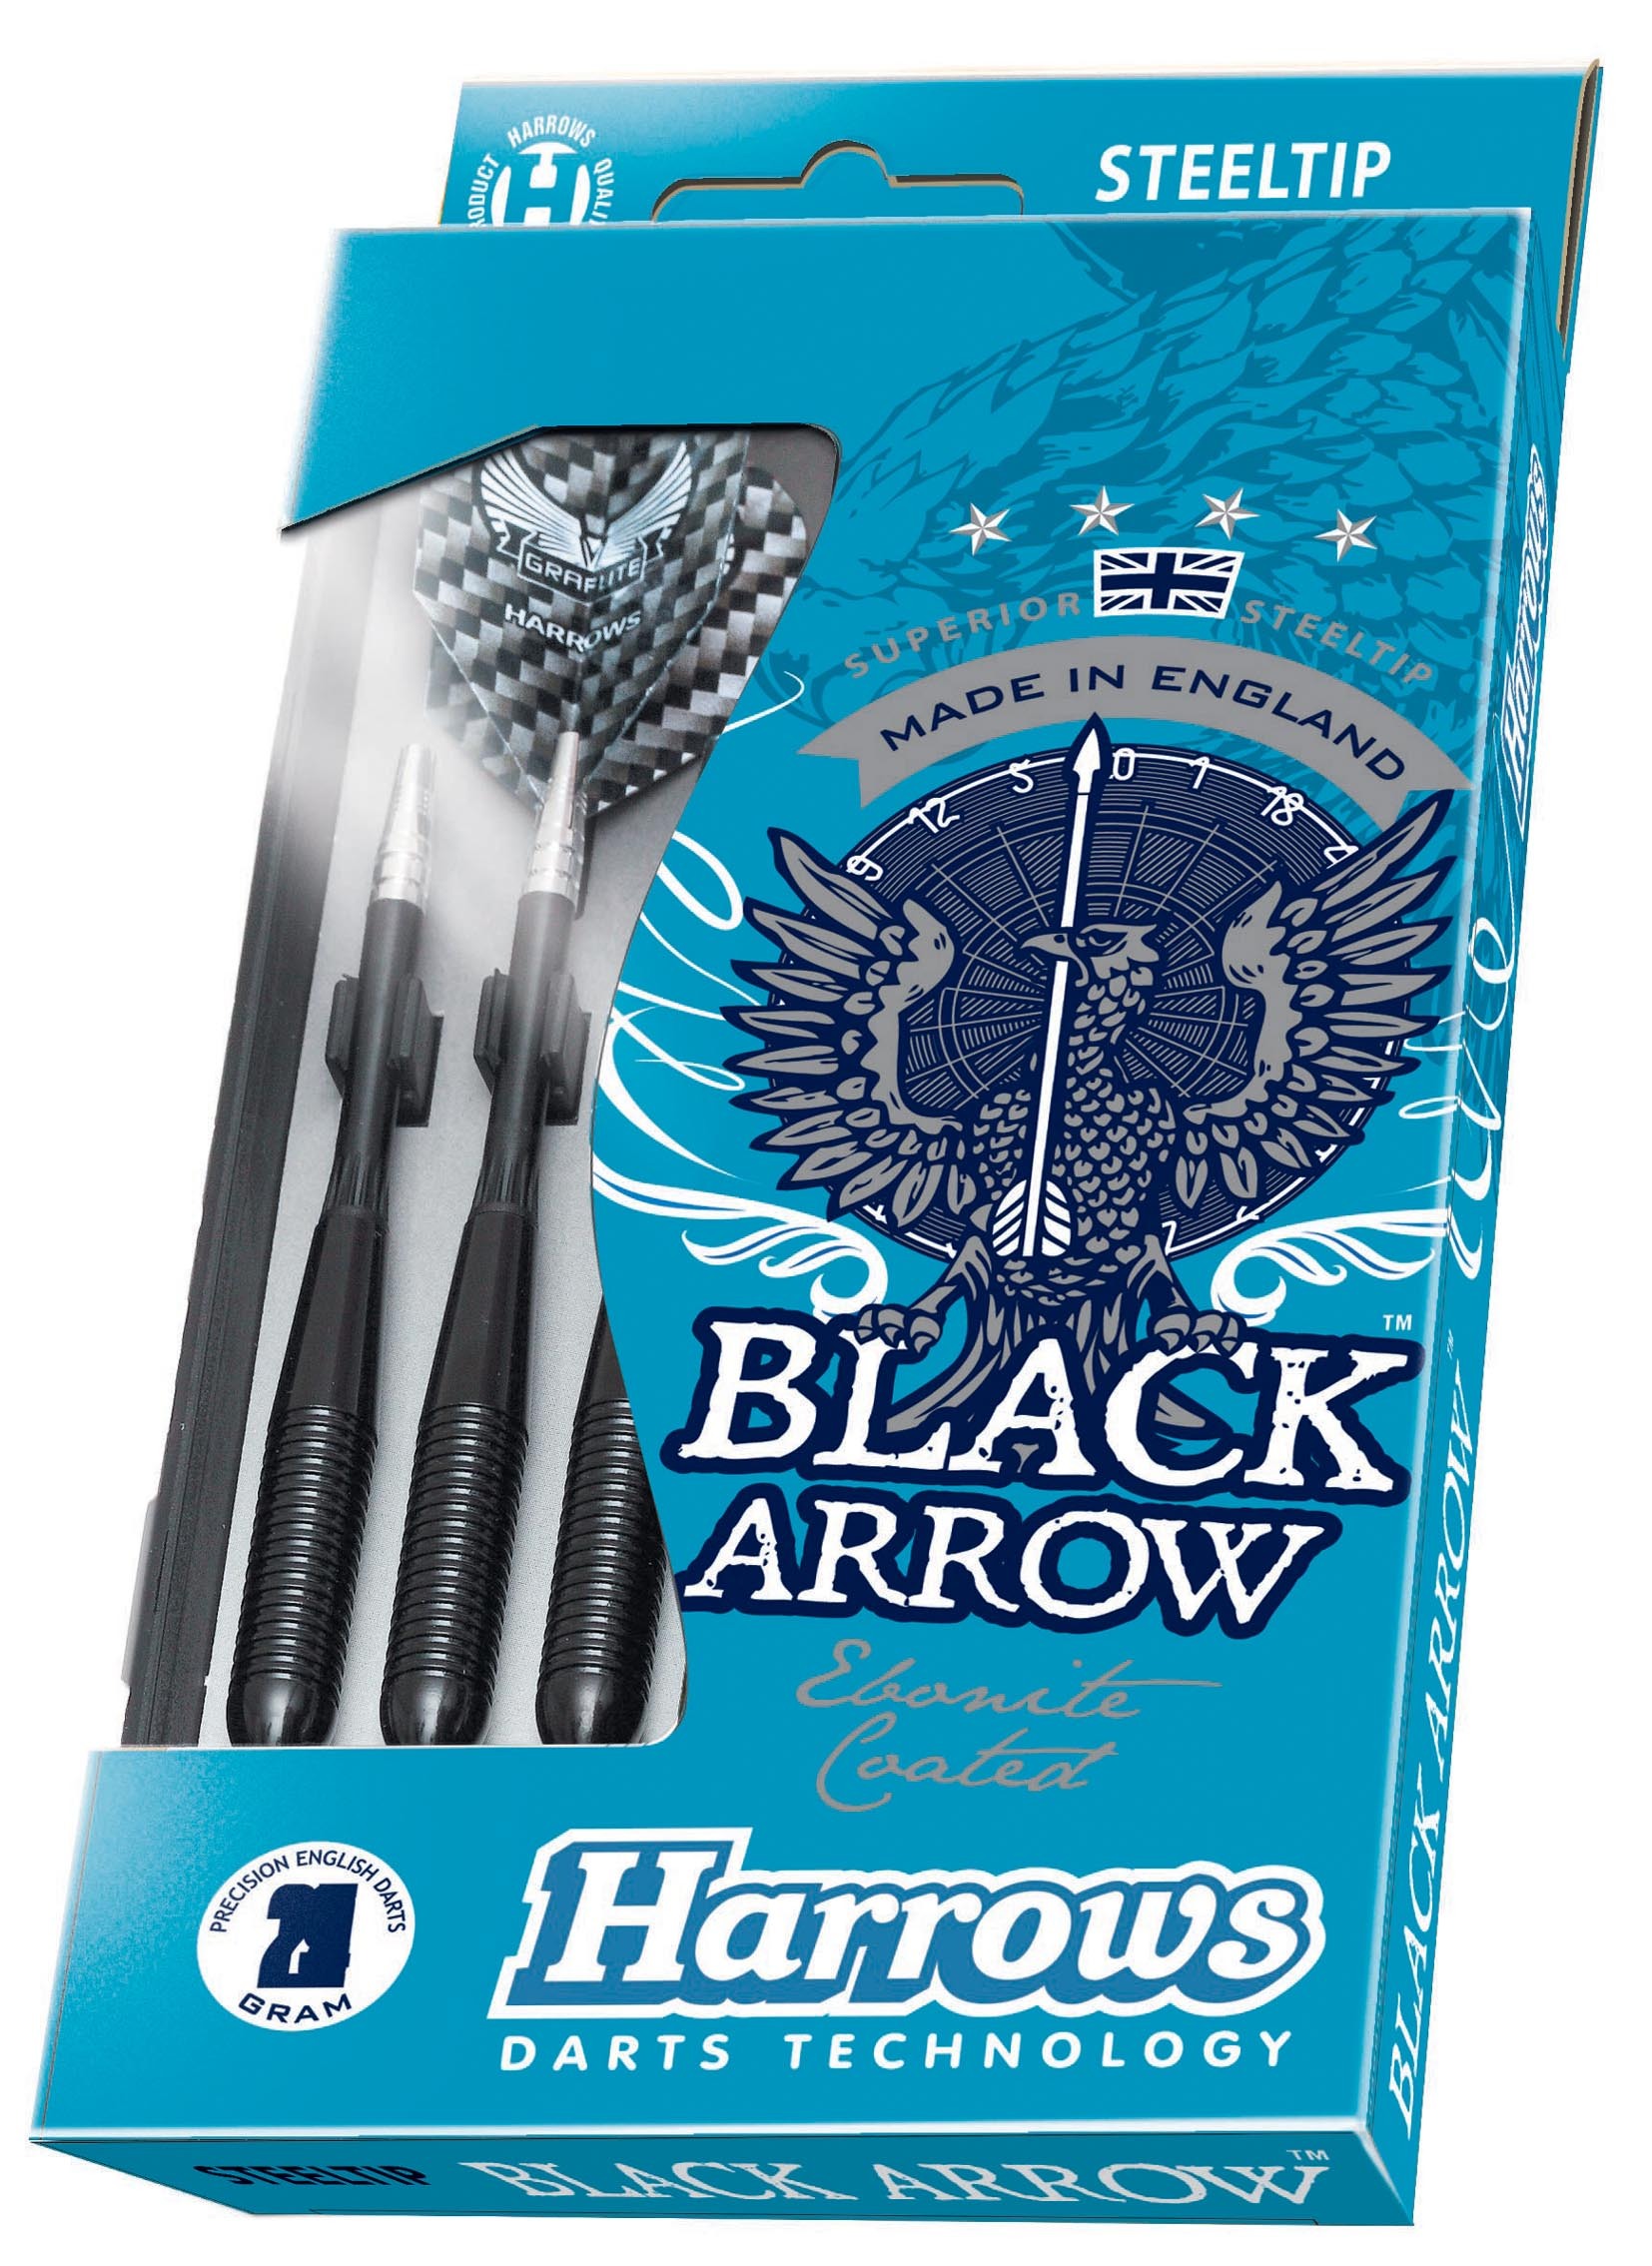 Harrows Black Arrow Steeltip dartpijlenset